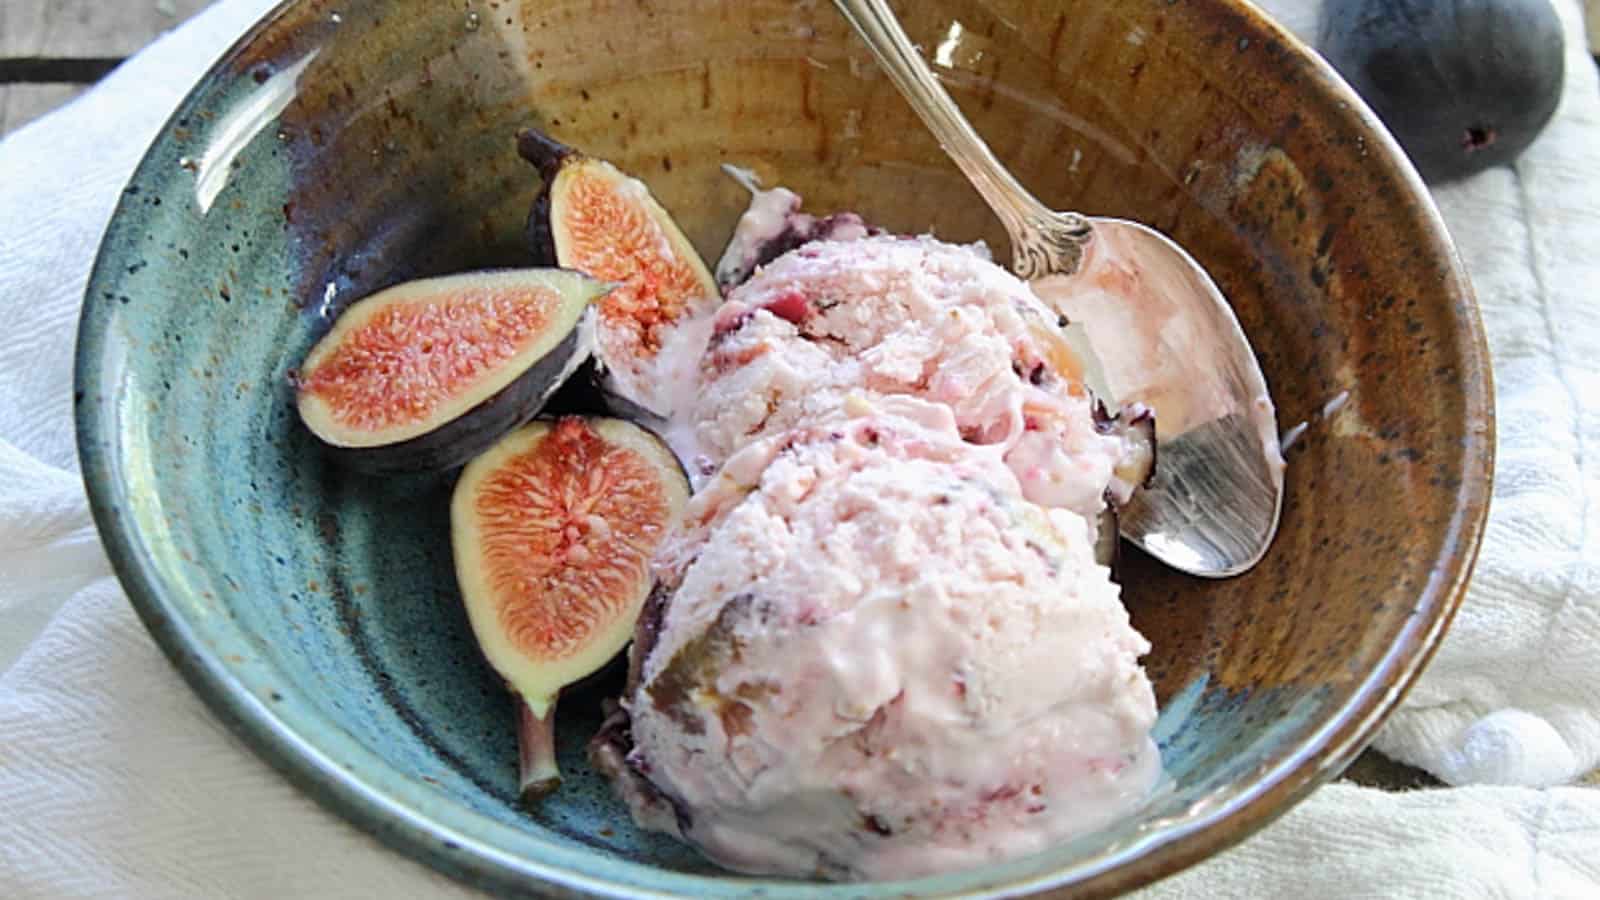 Frozen yogurt with figs in a bowl.